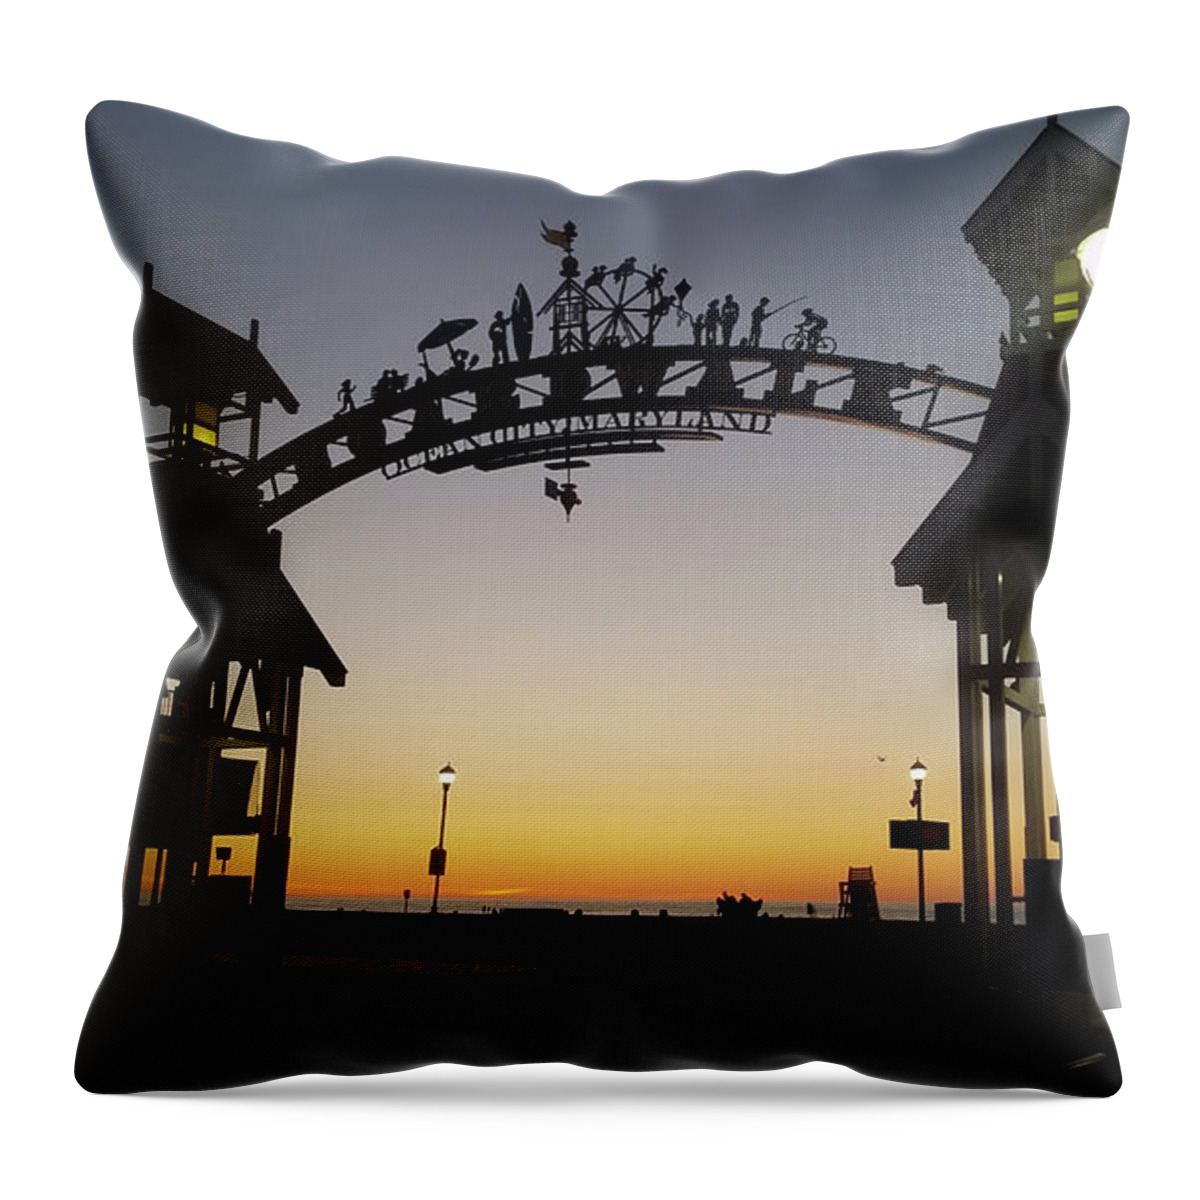 Boardwalk Throw Pillow featuring the photograph Boardwalk Arch at Dawn by Robert Banach